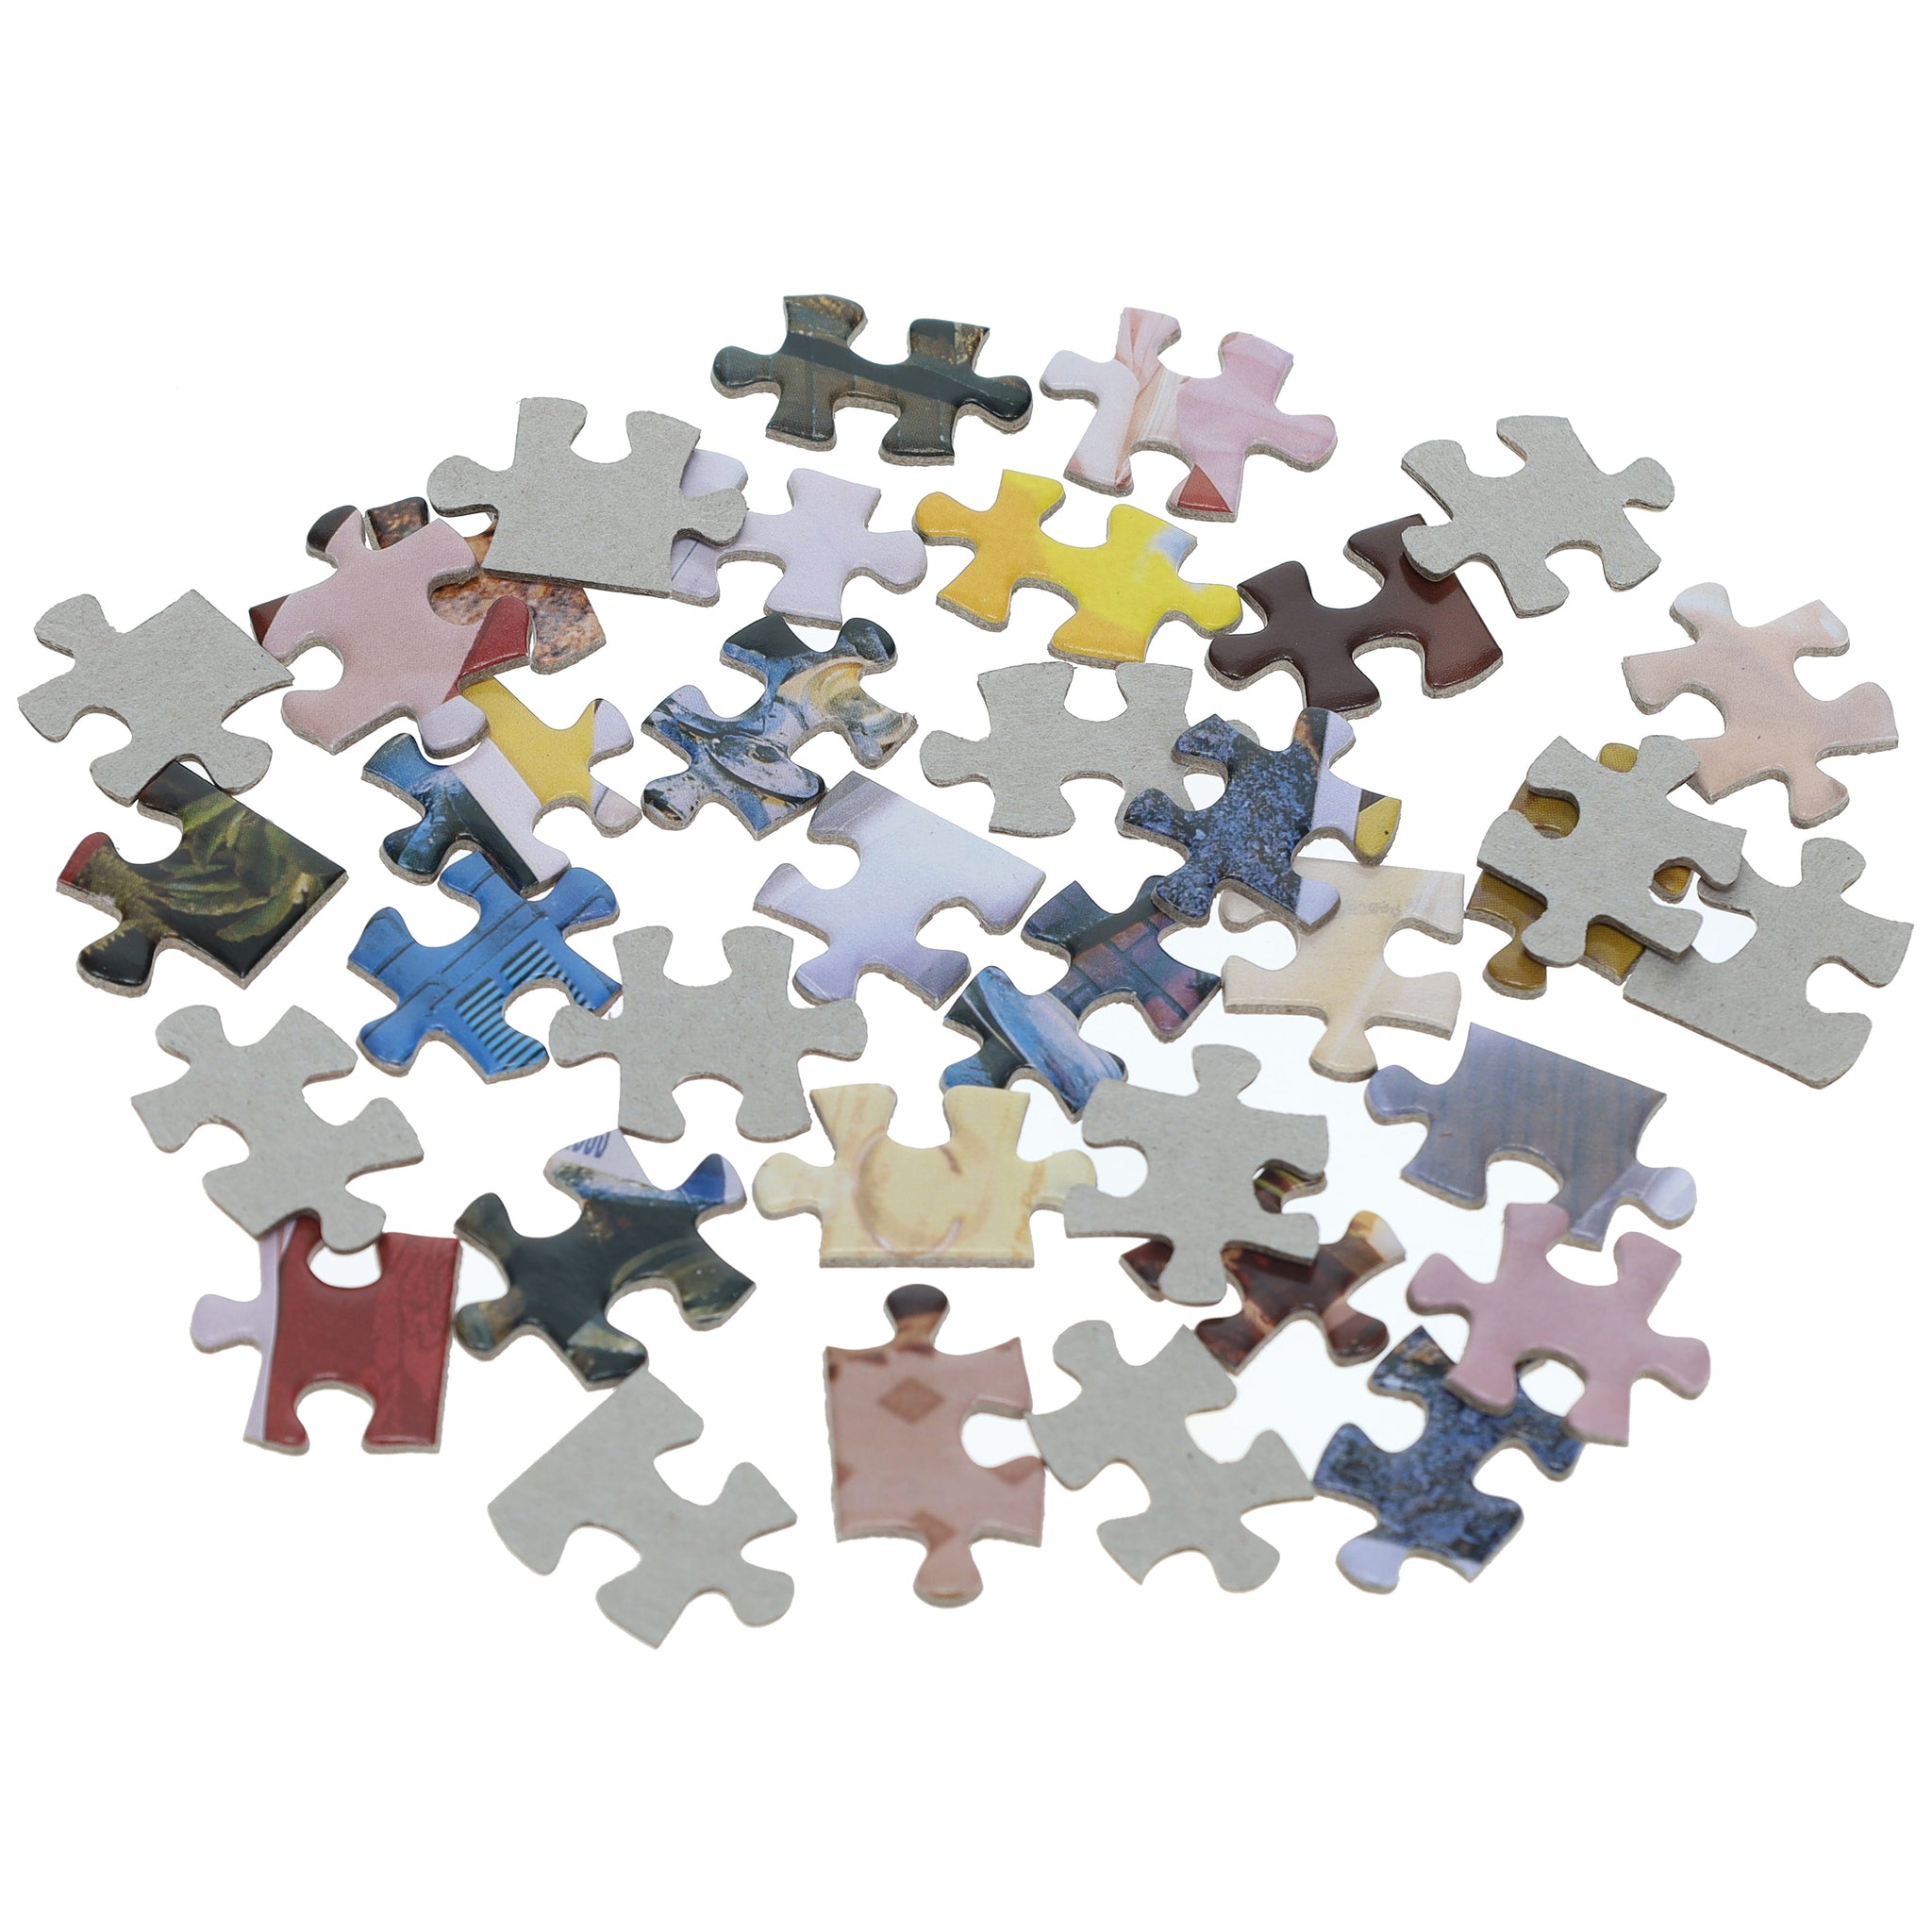 500 Puzzles - Mixed Puzzles